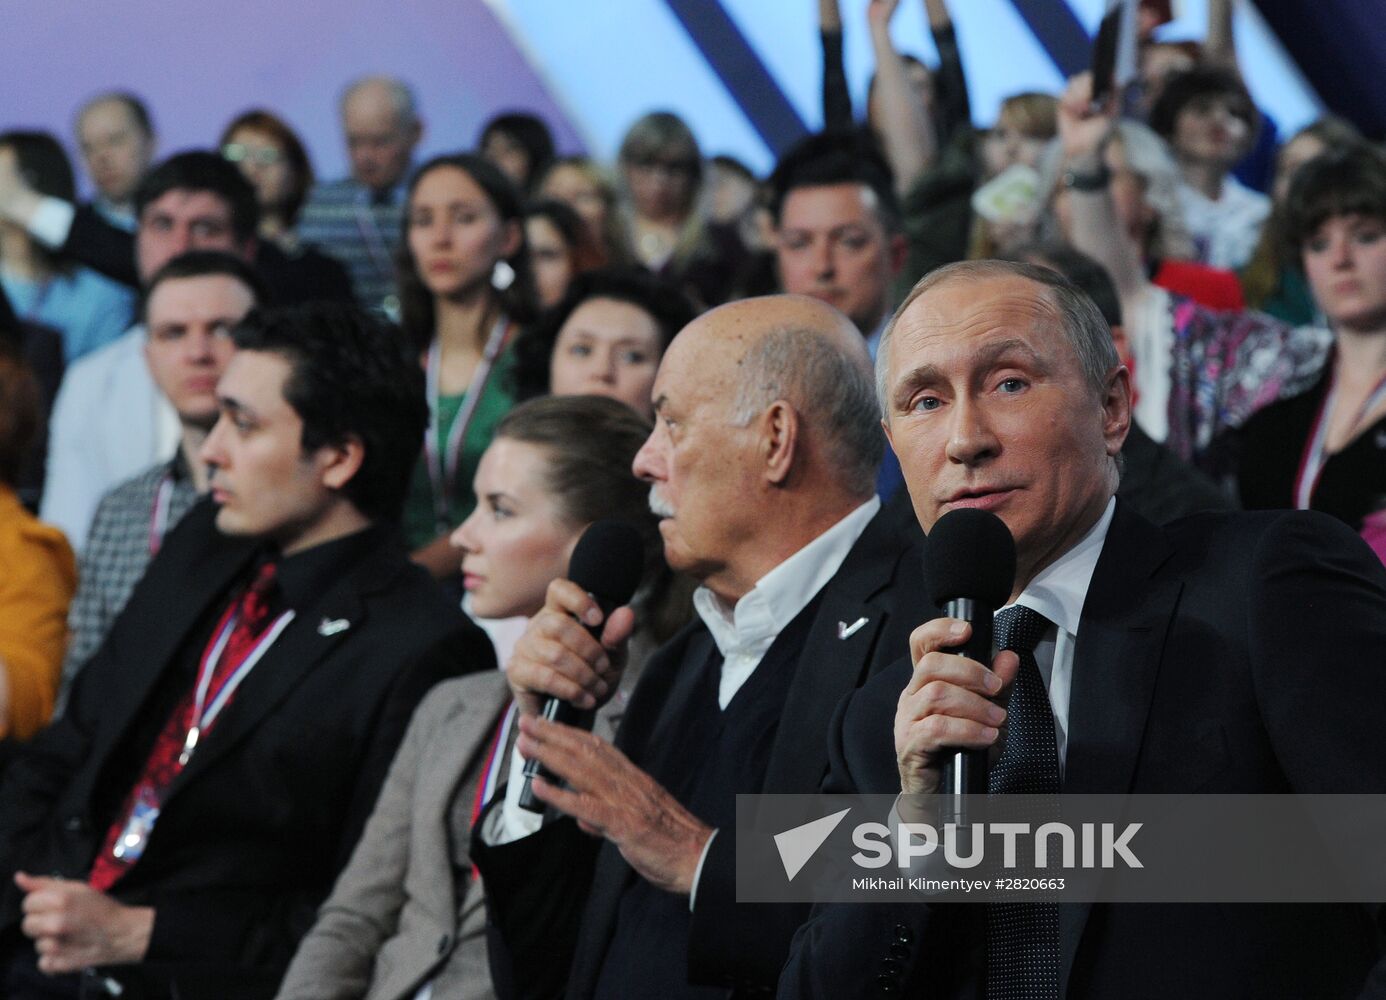 President Vladimir Putin attends Russian Popular Forum's media forum,Truth and Justice